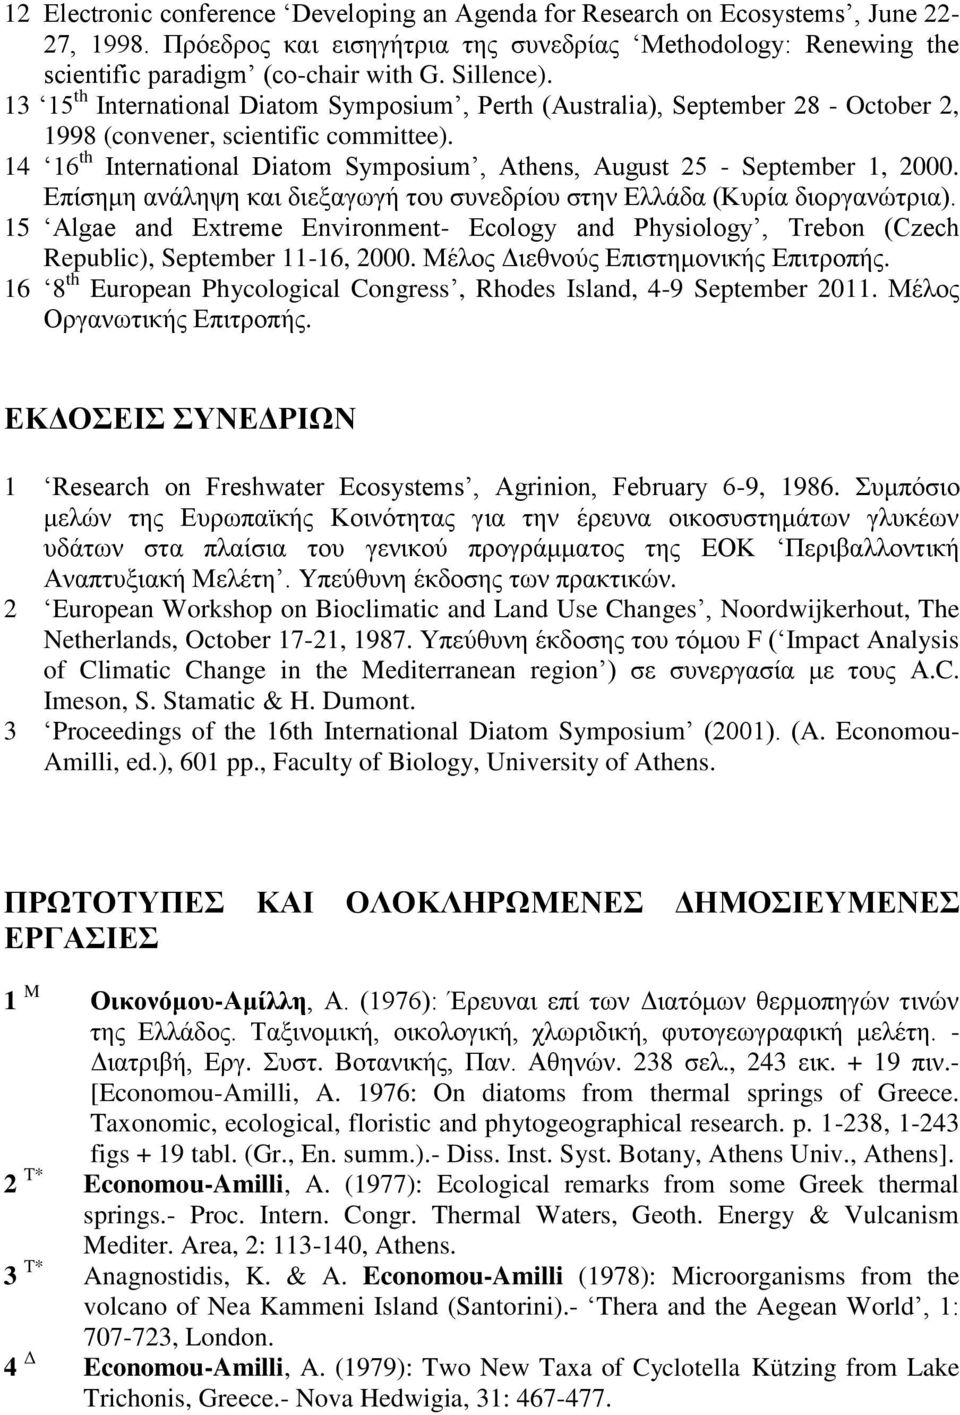 14 16 th International Diatom Symposium, Athens, August 25 - September 1, 2000. Επίσημη ανάληψη και διεξαγωγή του συνεδρίου στην Ελλάδα (Κυρία διοργανώτρια).